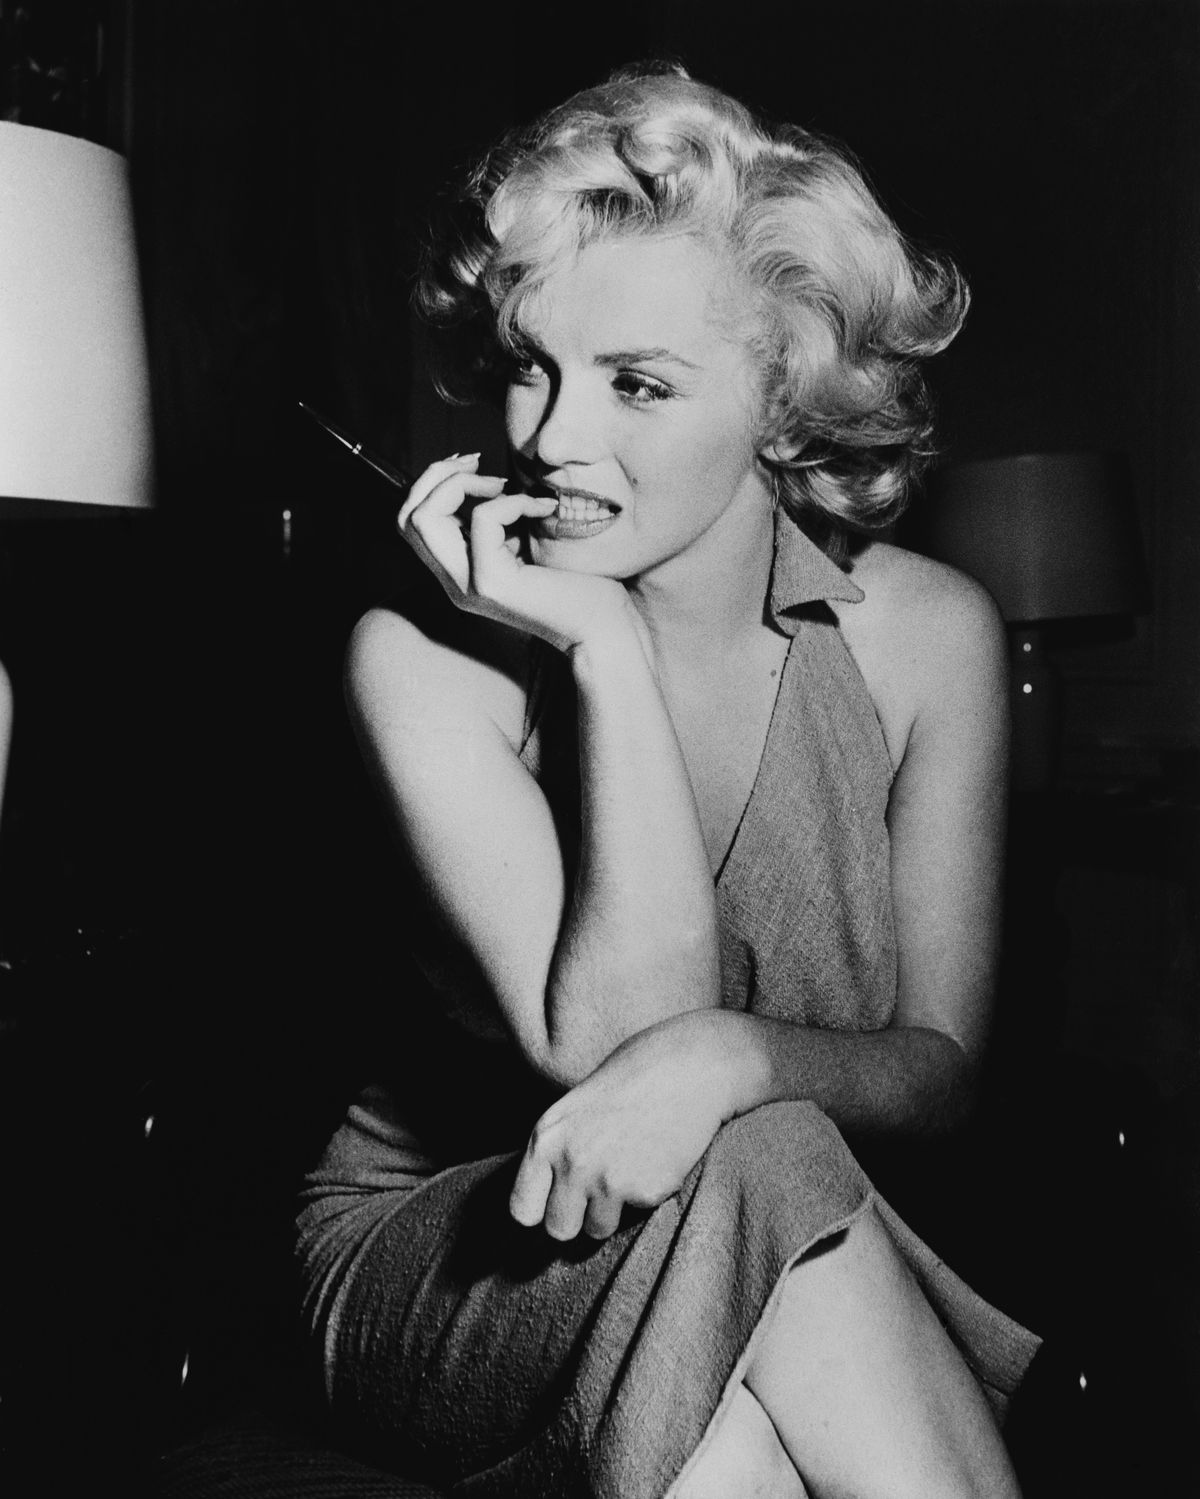 Black On Black Forced Porn - The explosive real story behind Marilyn Monroe film Blonde